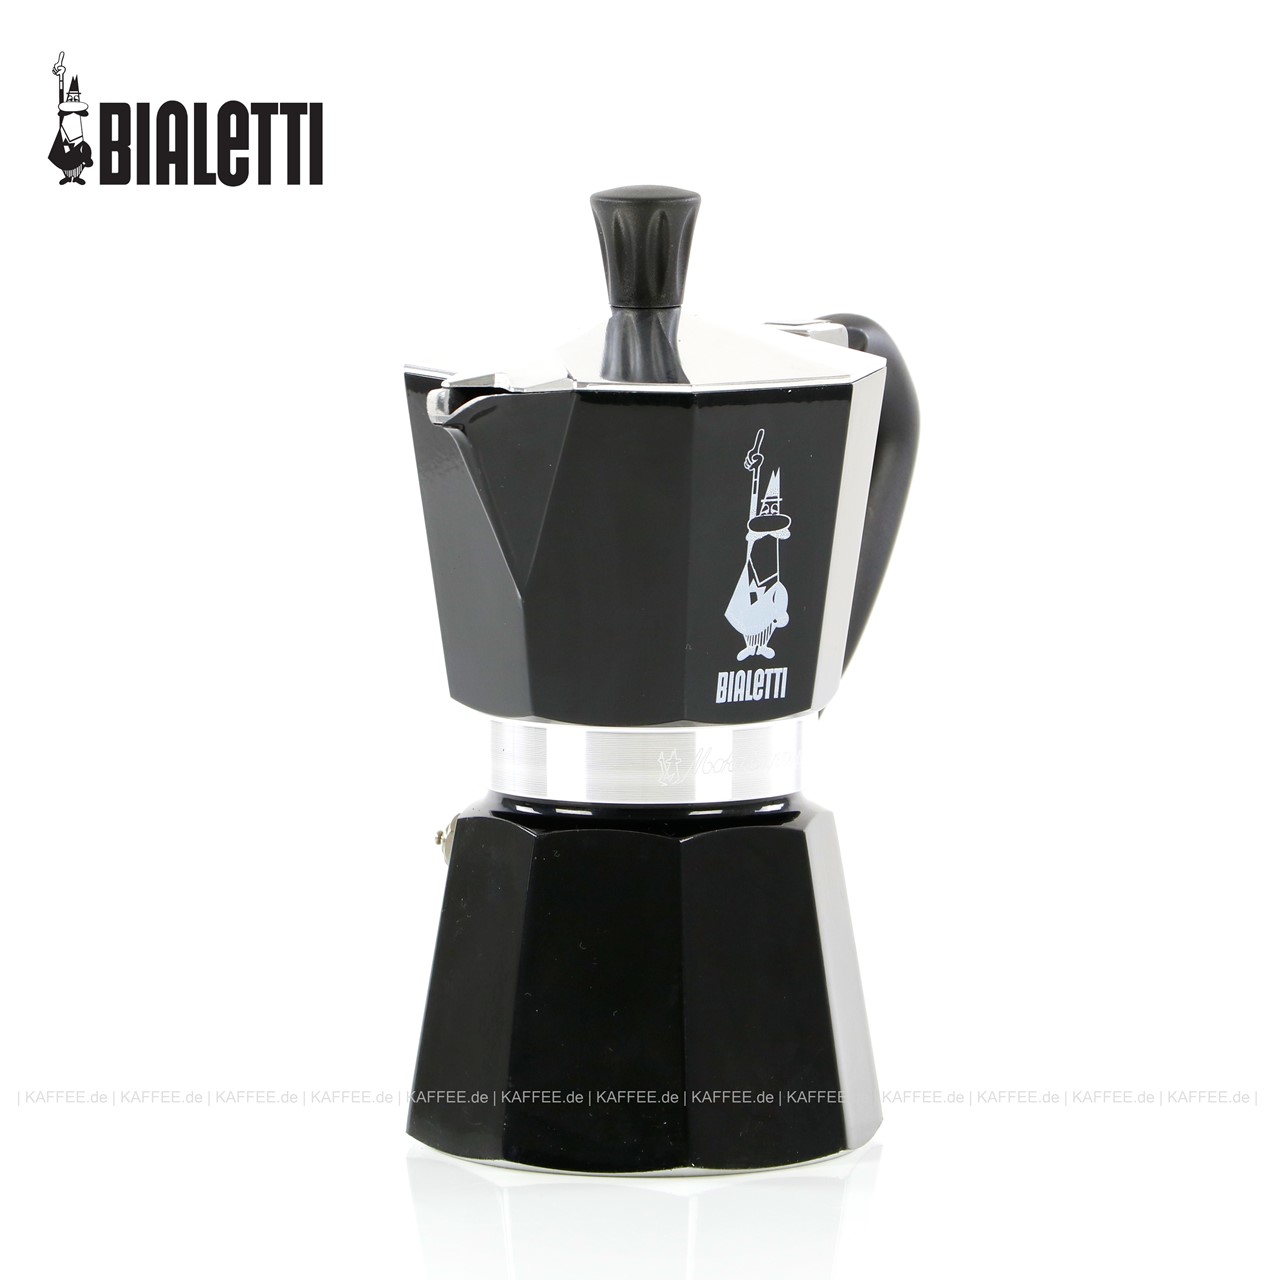 Bialetti 4953 Moka Express Espresso Maker, Black